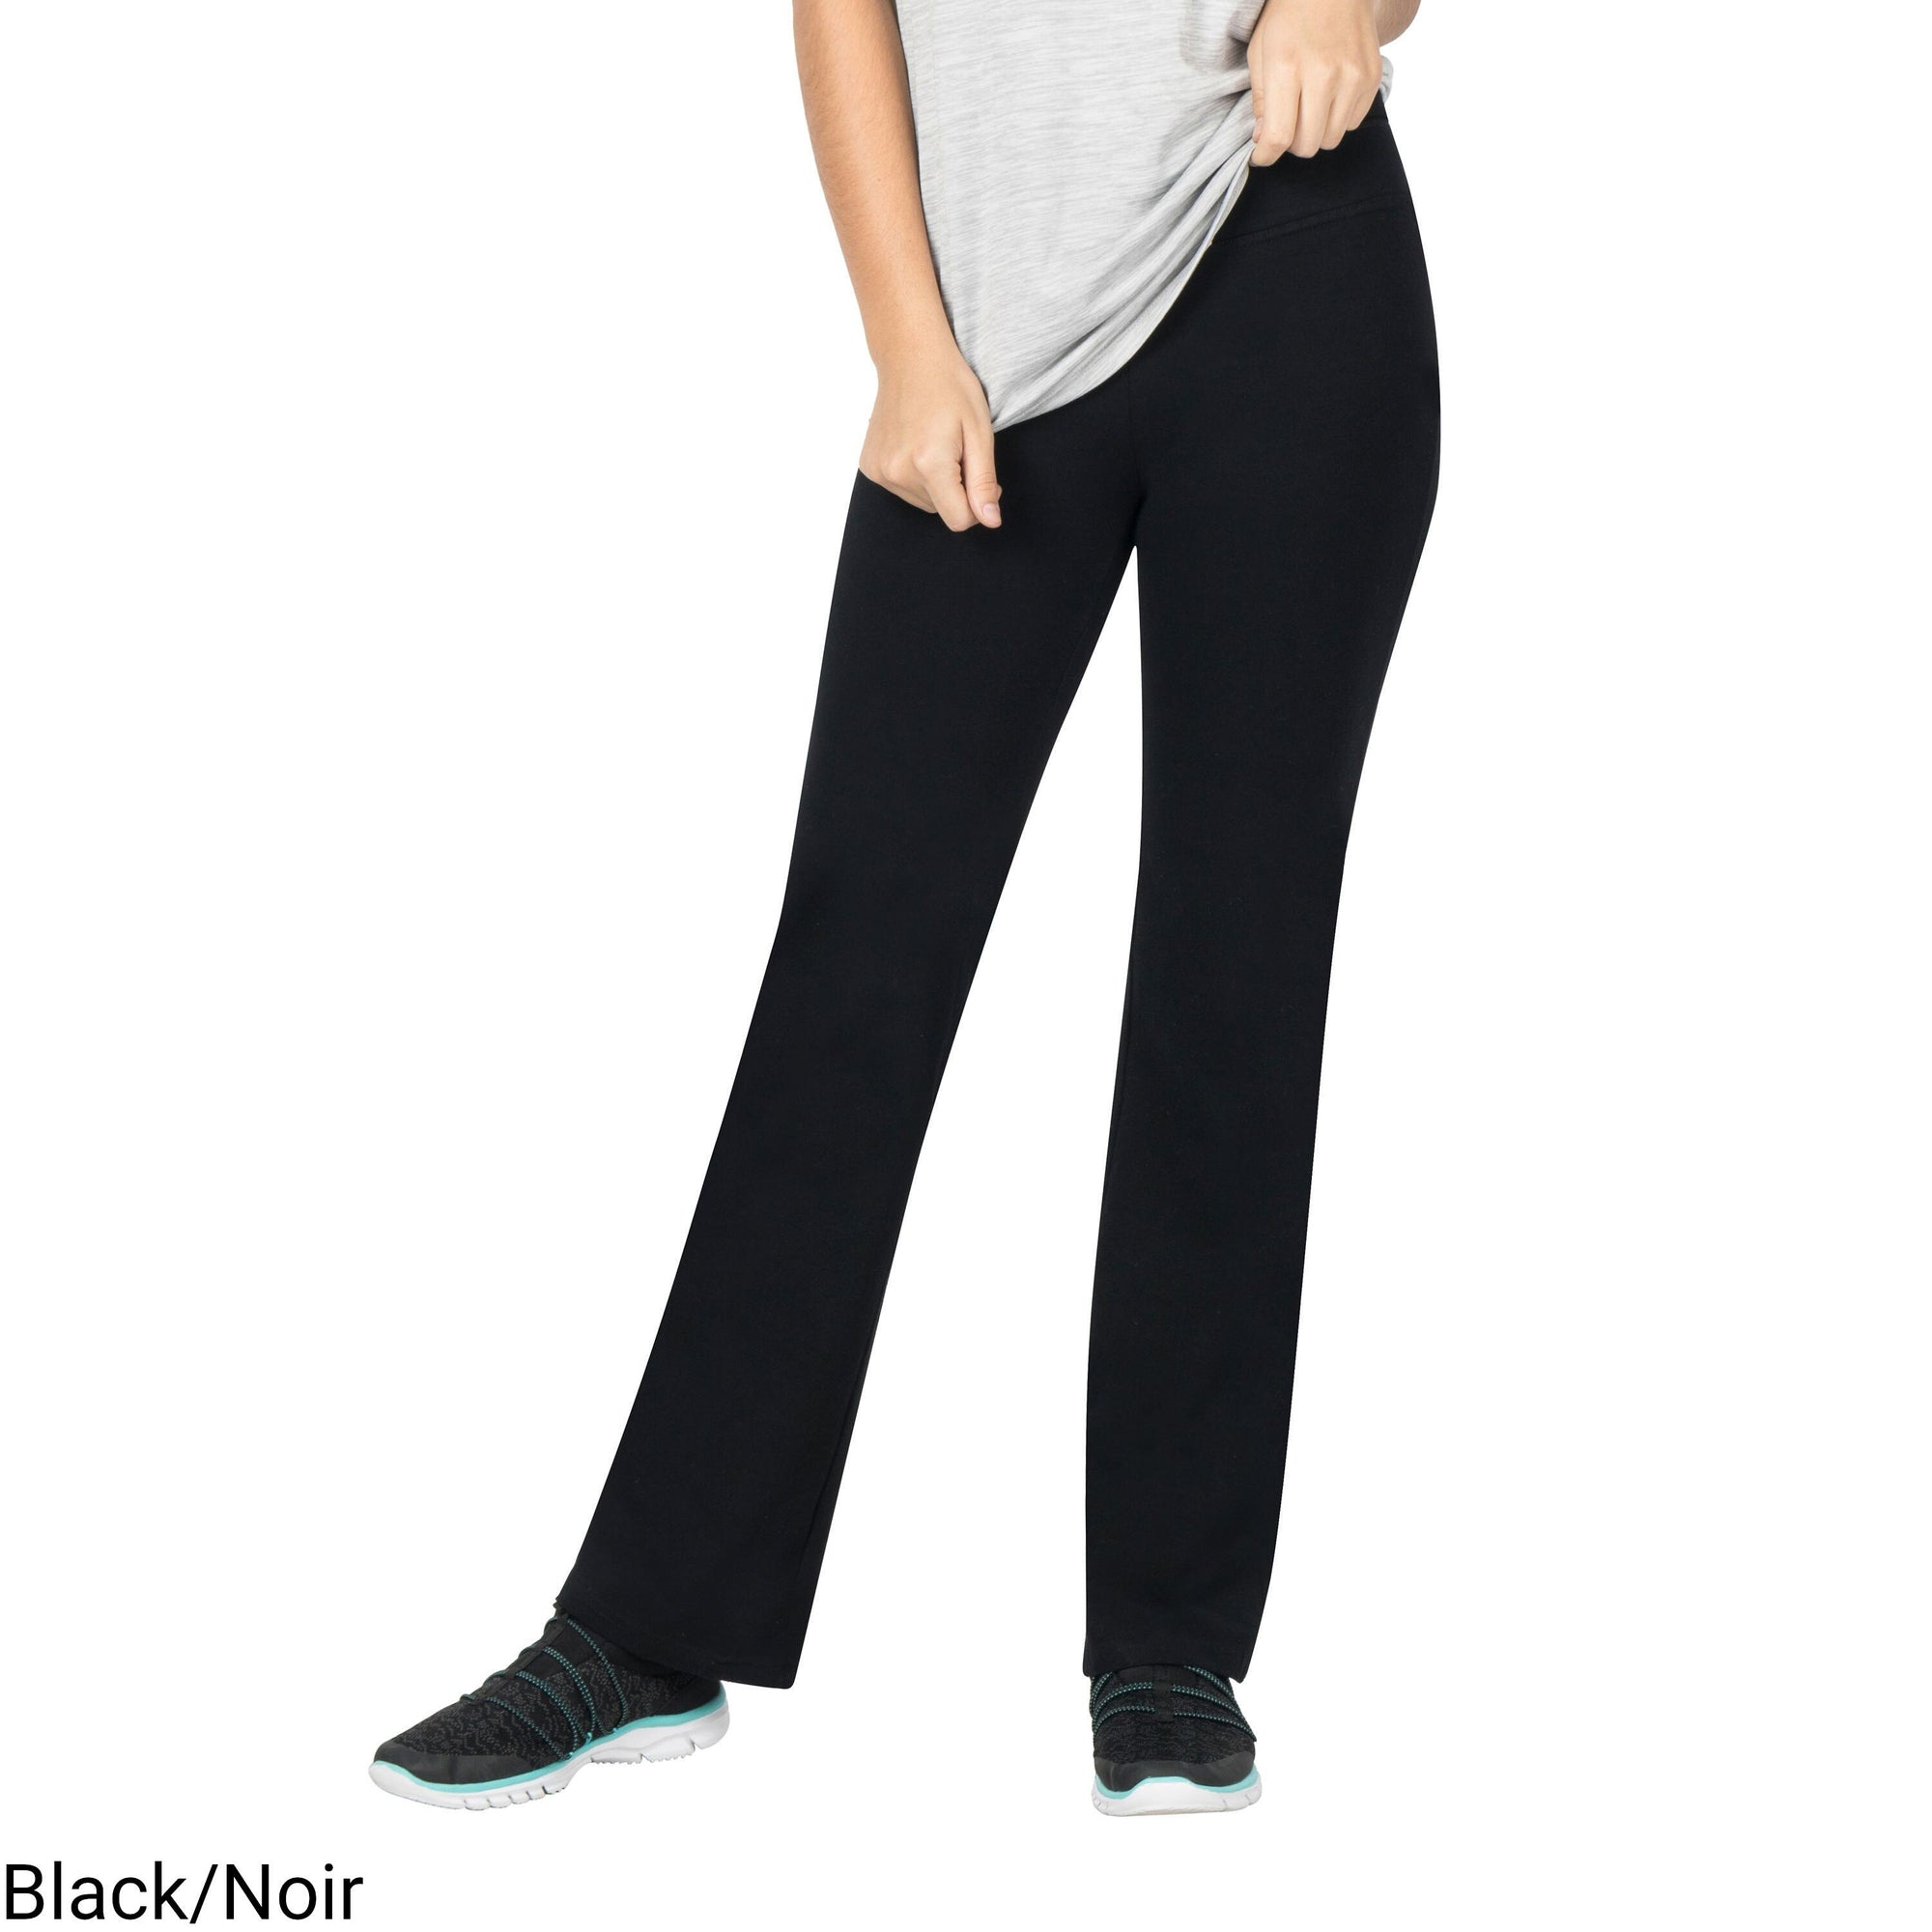 Plus Size Yoga Pants for Women 3X Leg Pants Women Active